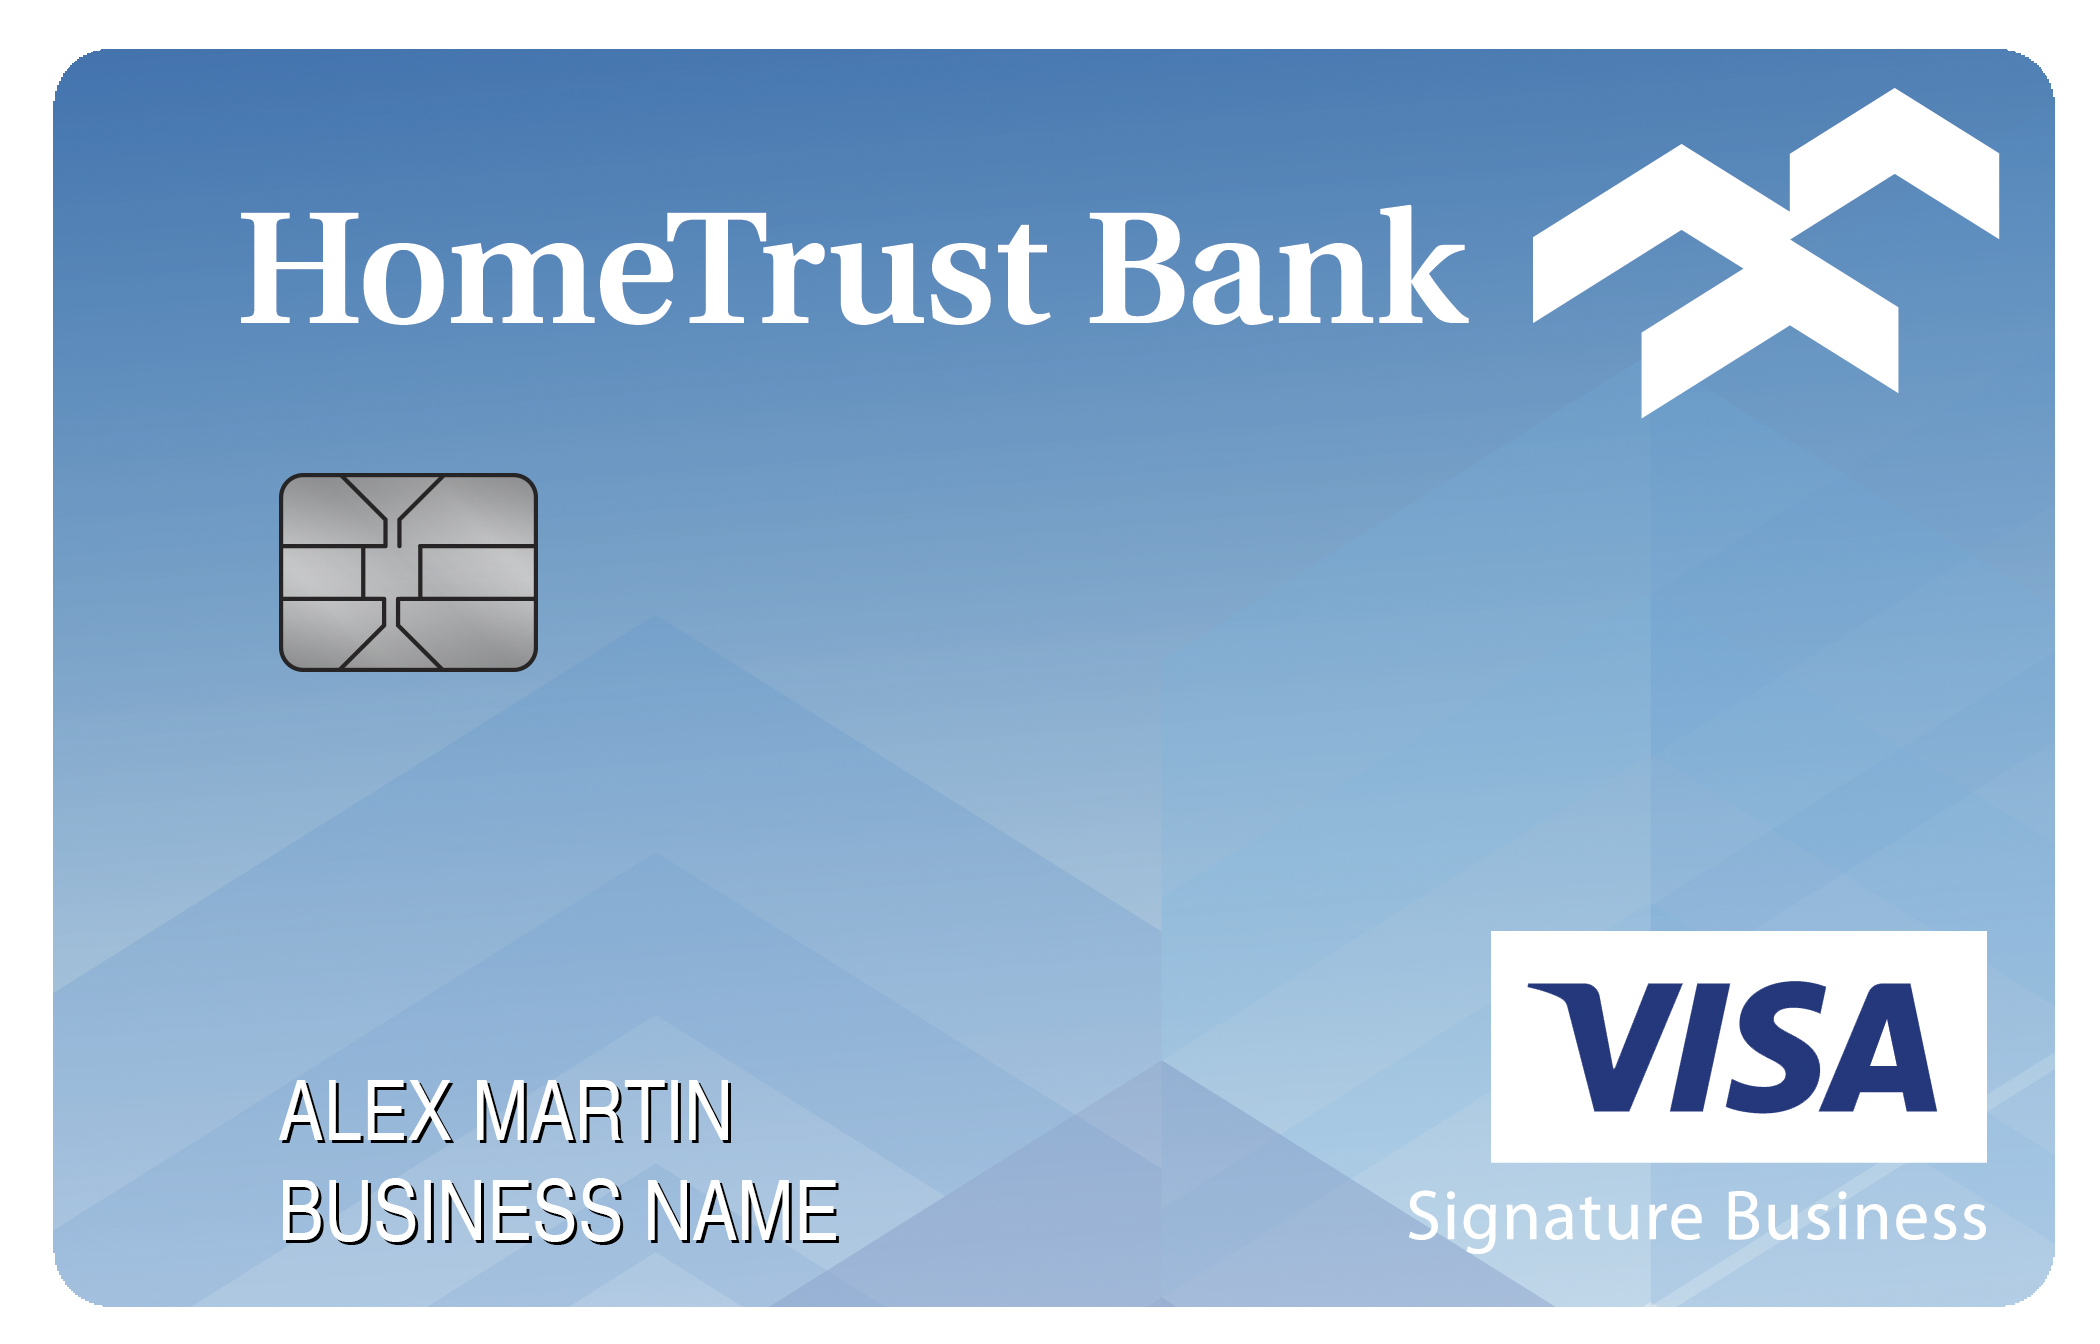 HomeTrust Bank Smart Business Rewards Card